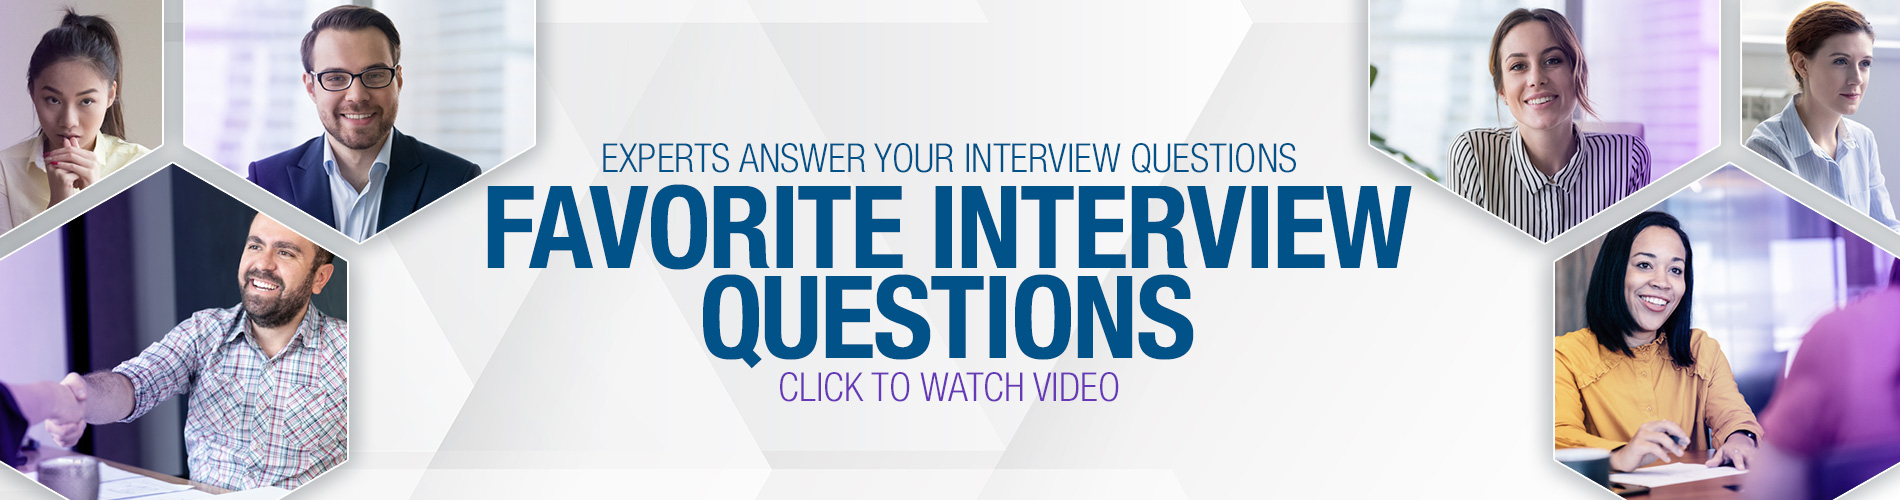 Express Jobs Favorite Interview Questions